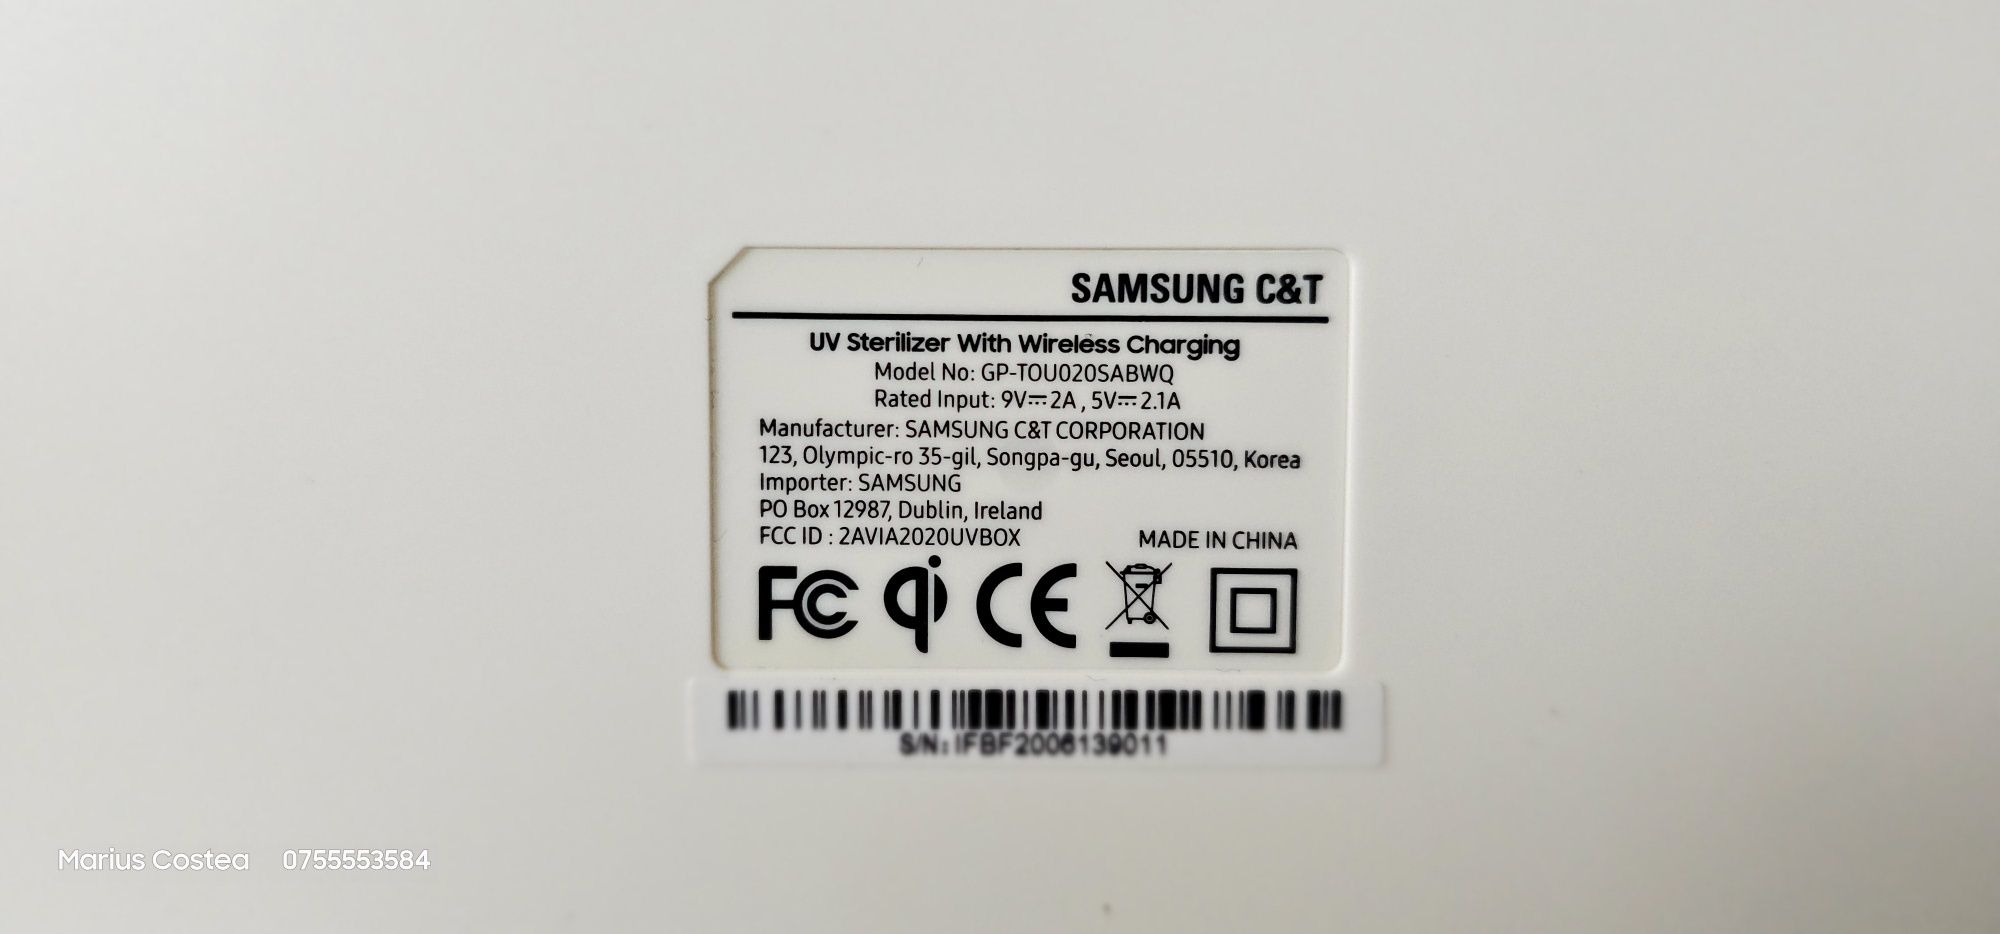 Samsung UV Sterilizer Whith Wireless Charging